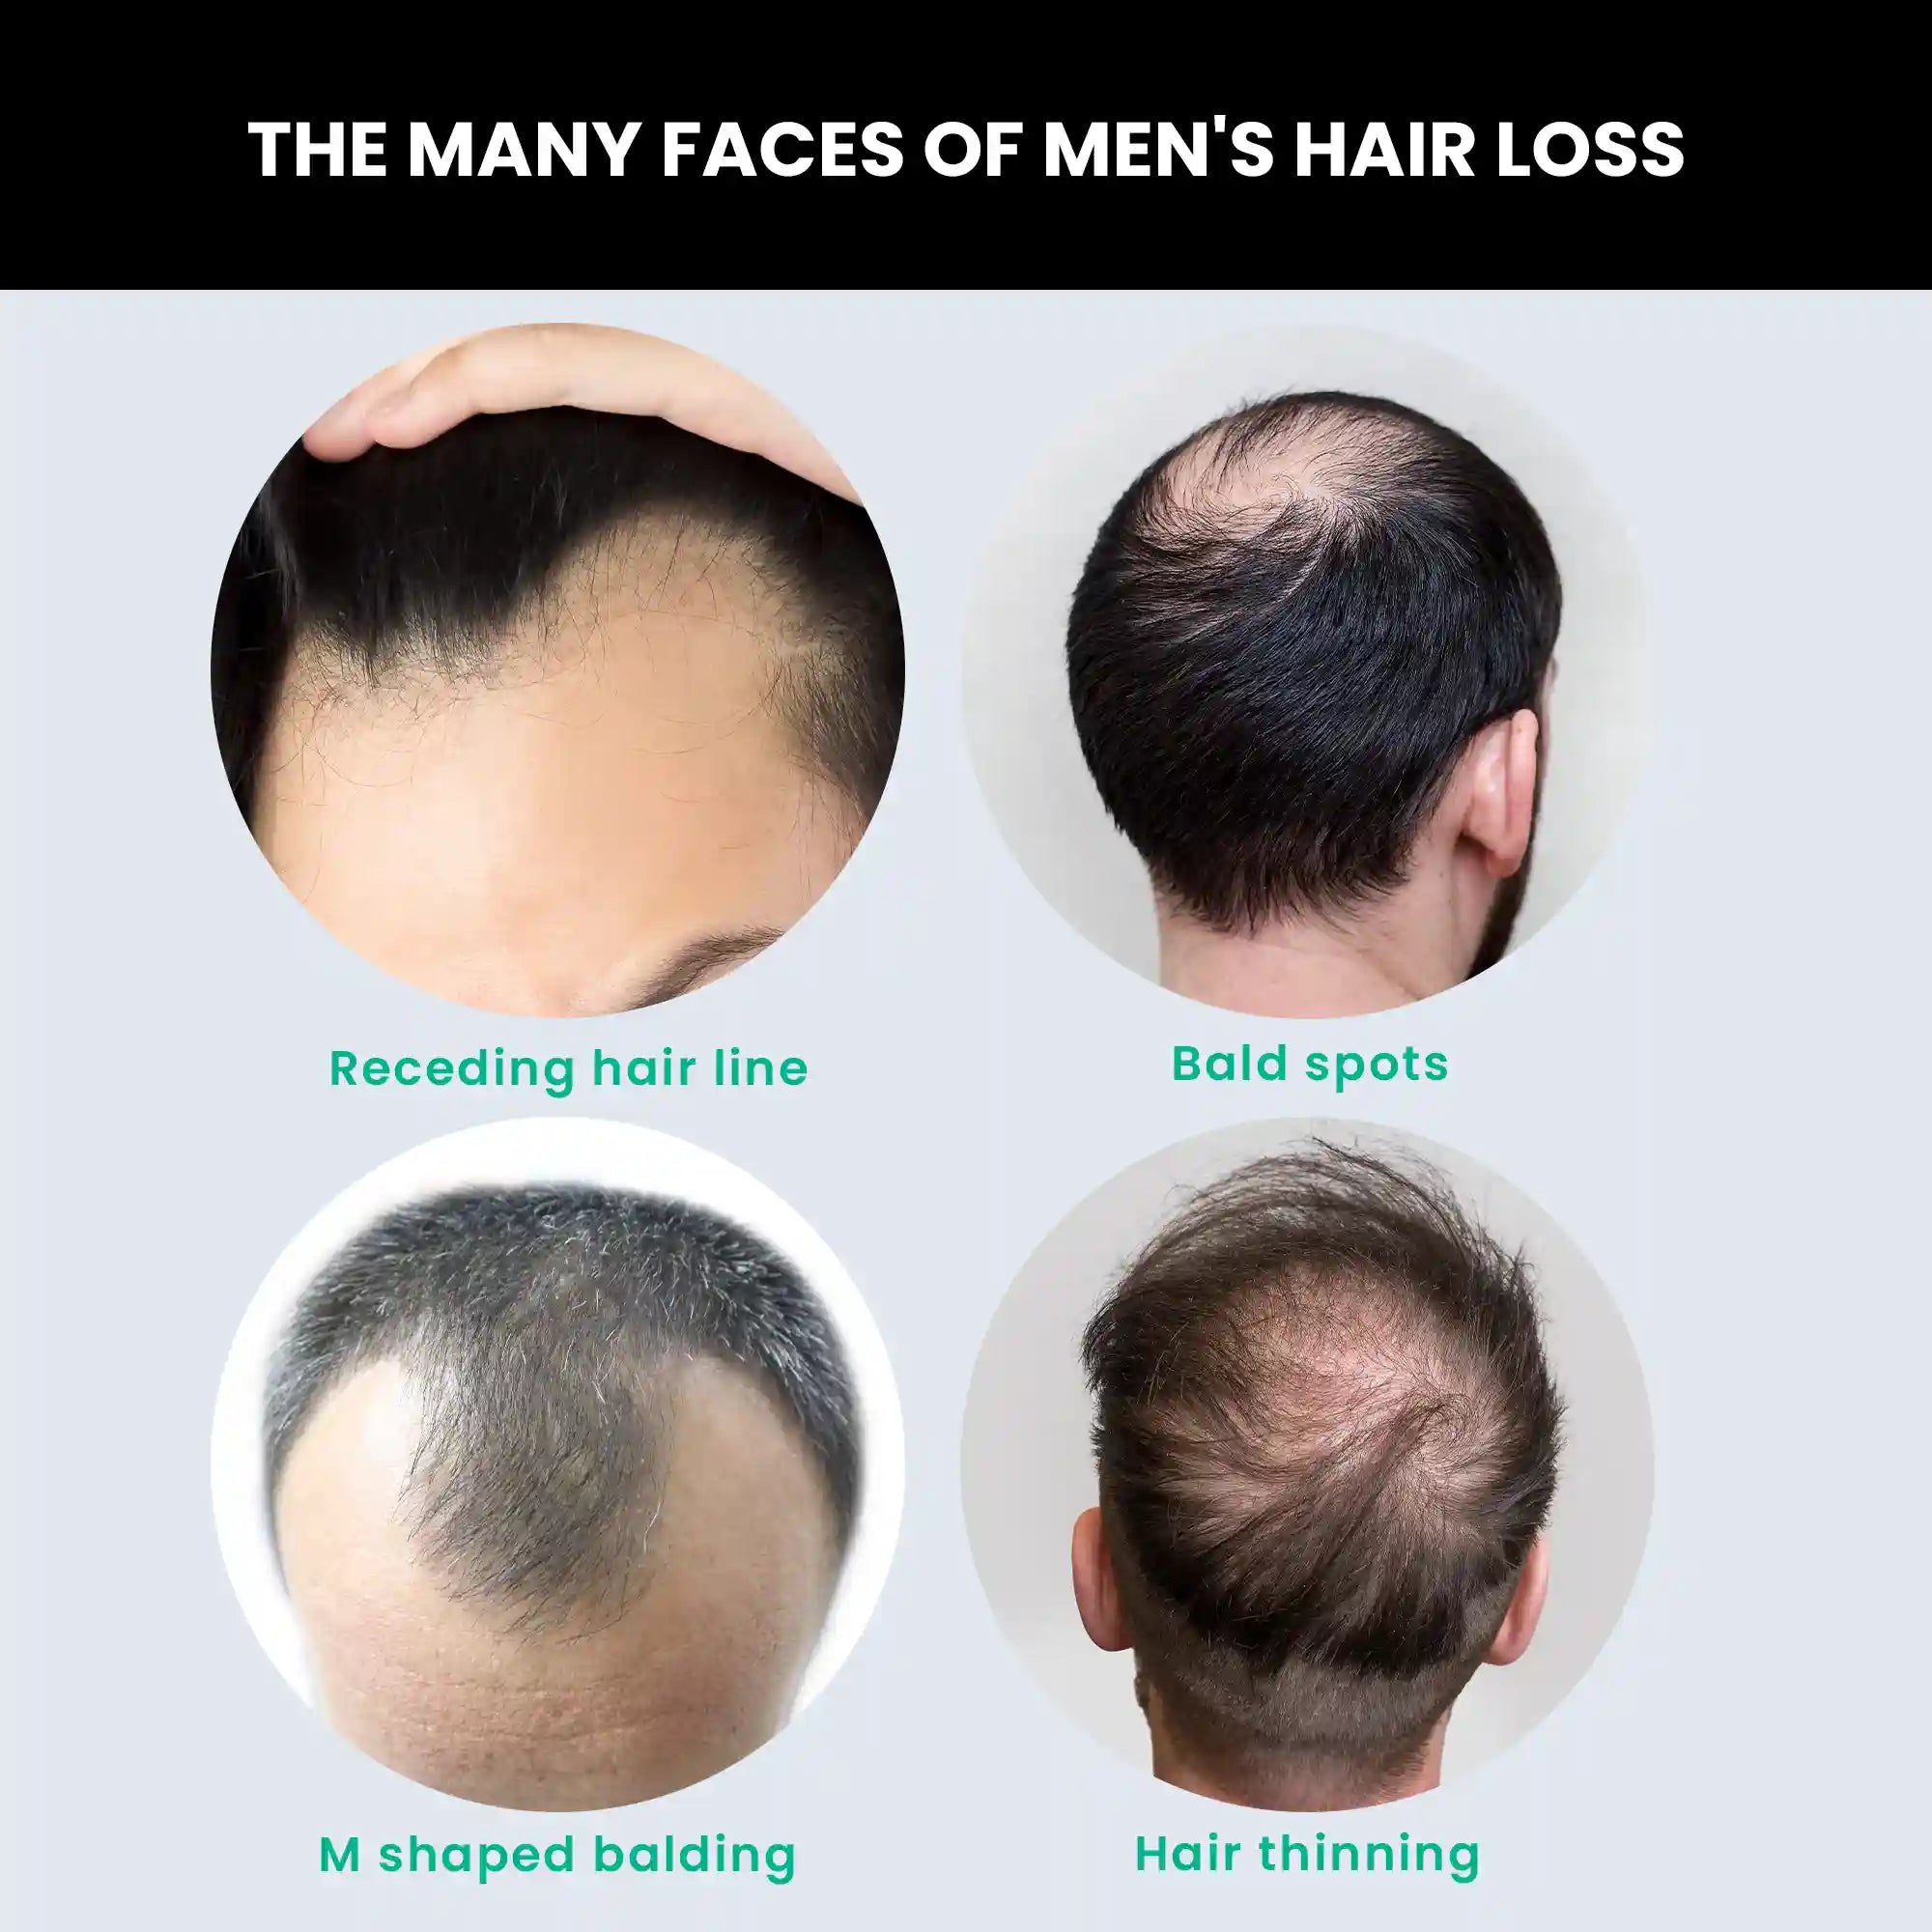 mens hair growth serum for bald spots hair thinning m shaped balding and receding hair line